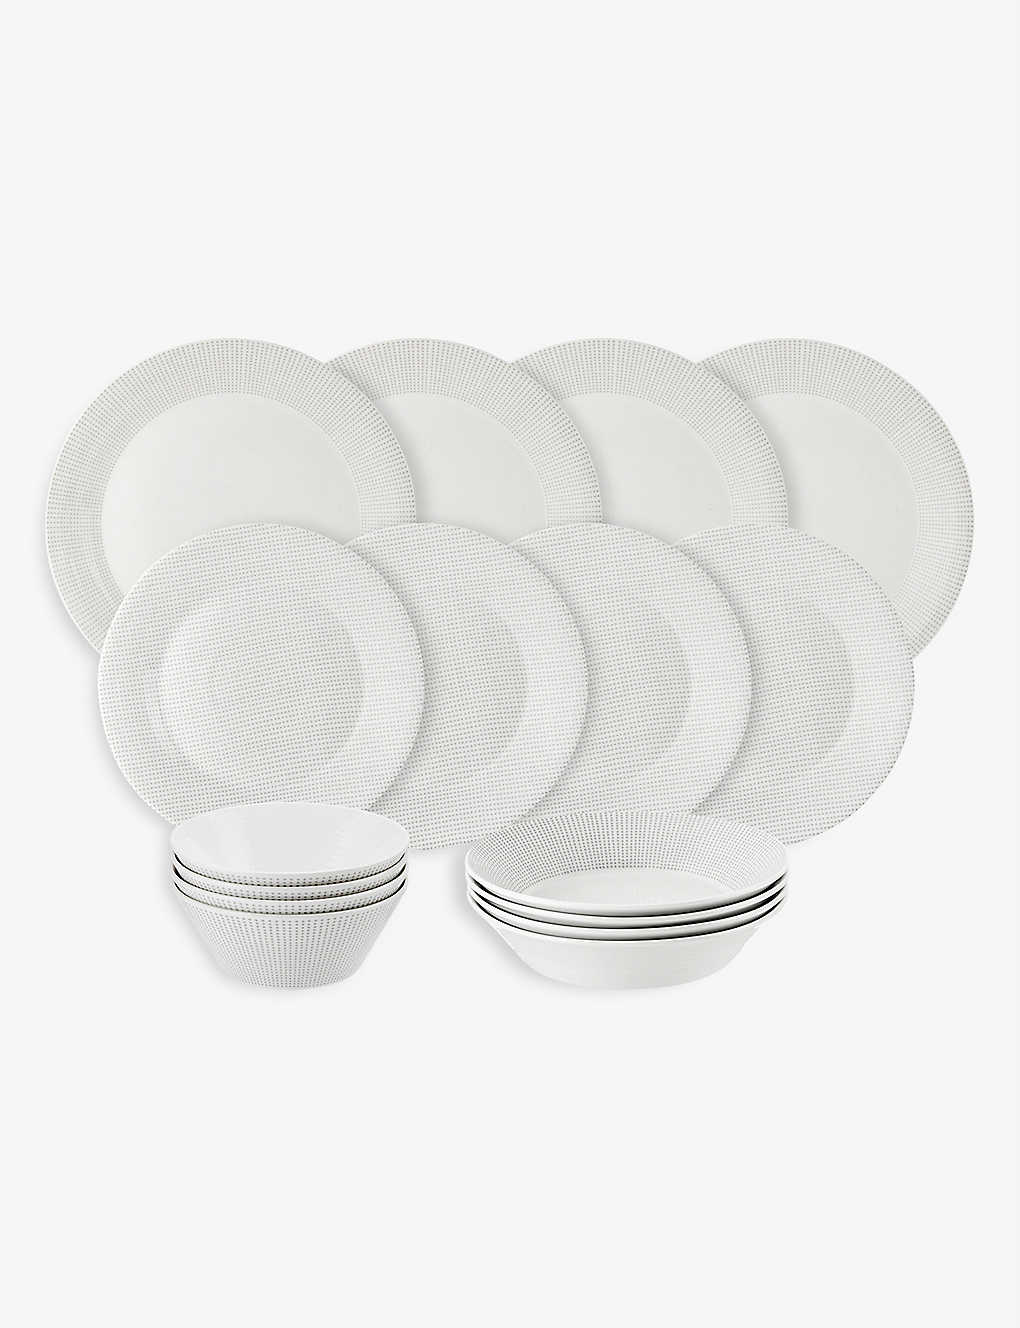 ROYAL DOULTON pVtBbN 16 e[uEFAZbg Pacific 16-piece porcelain tableware set